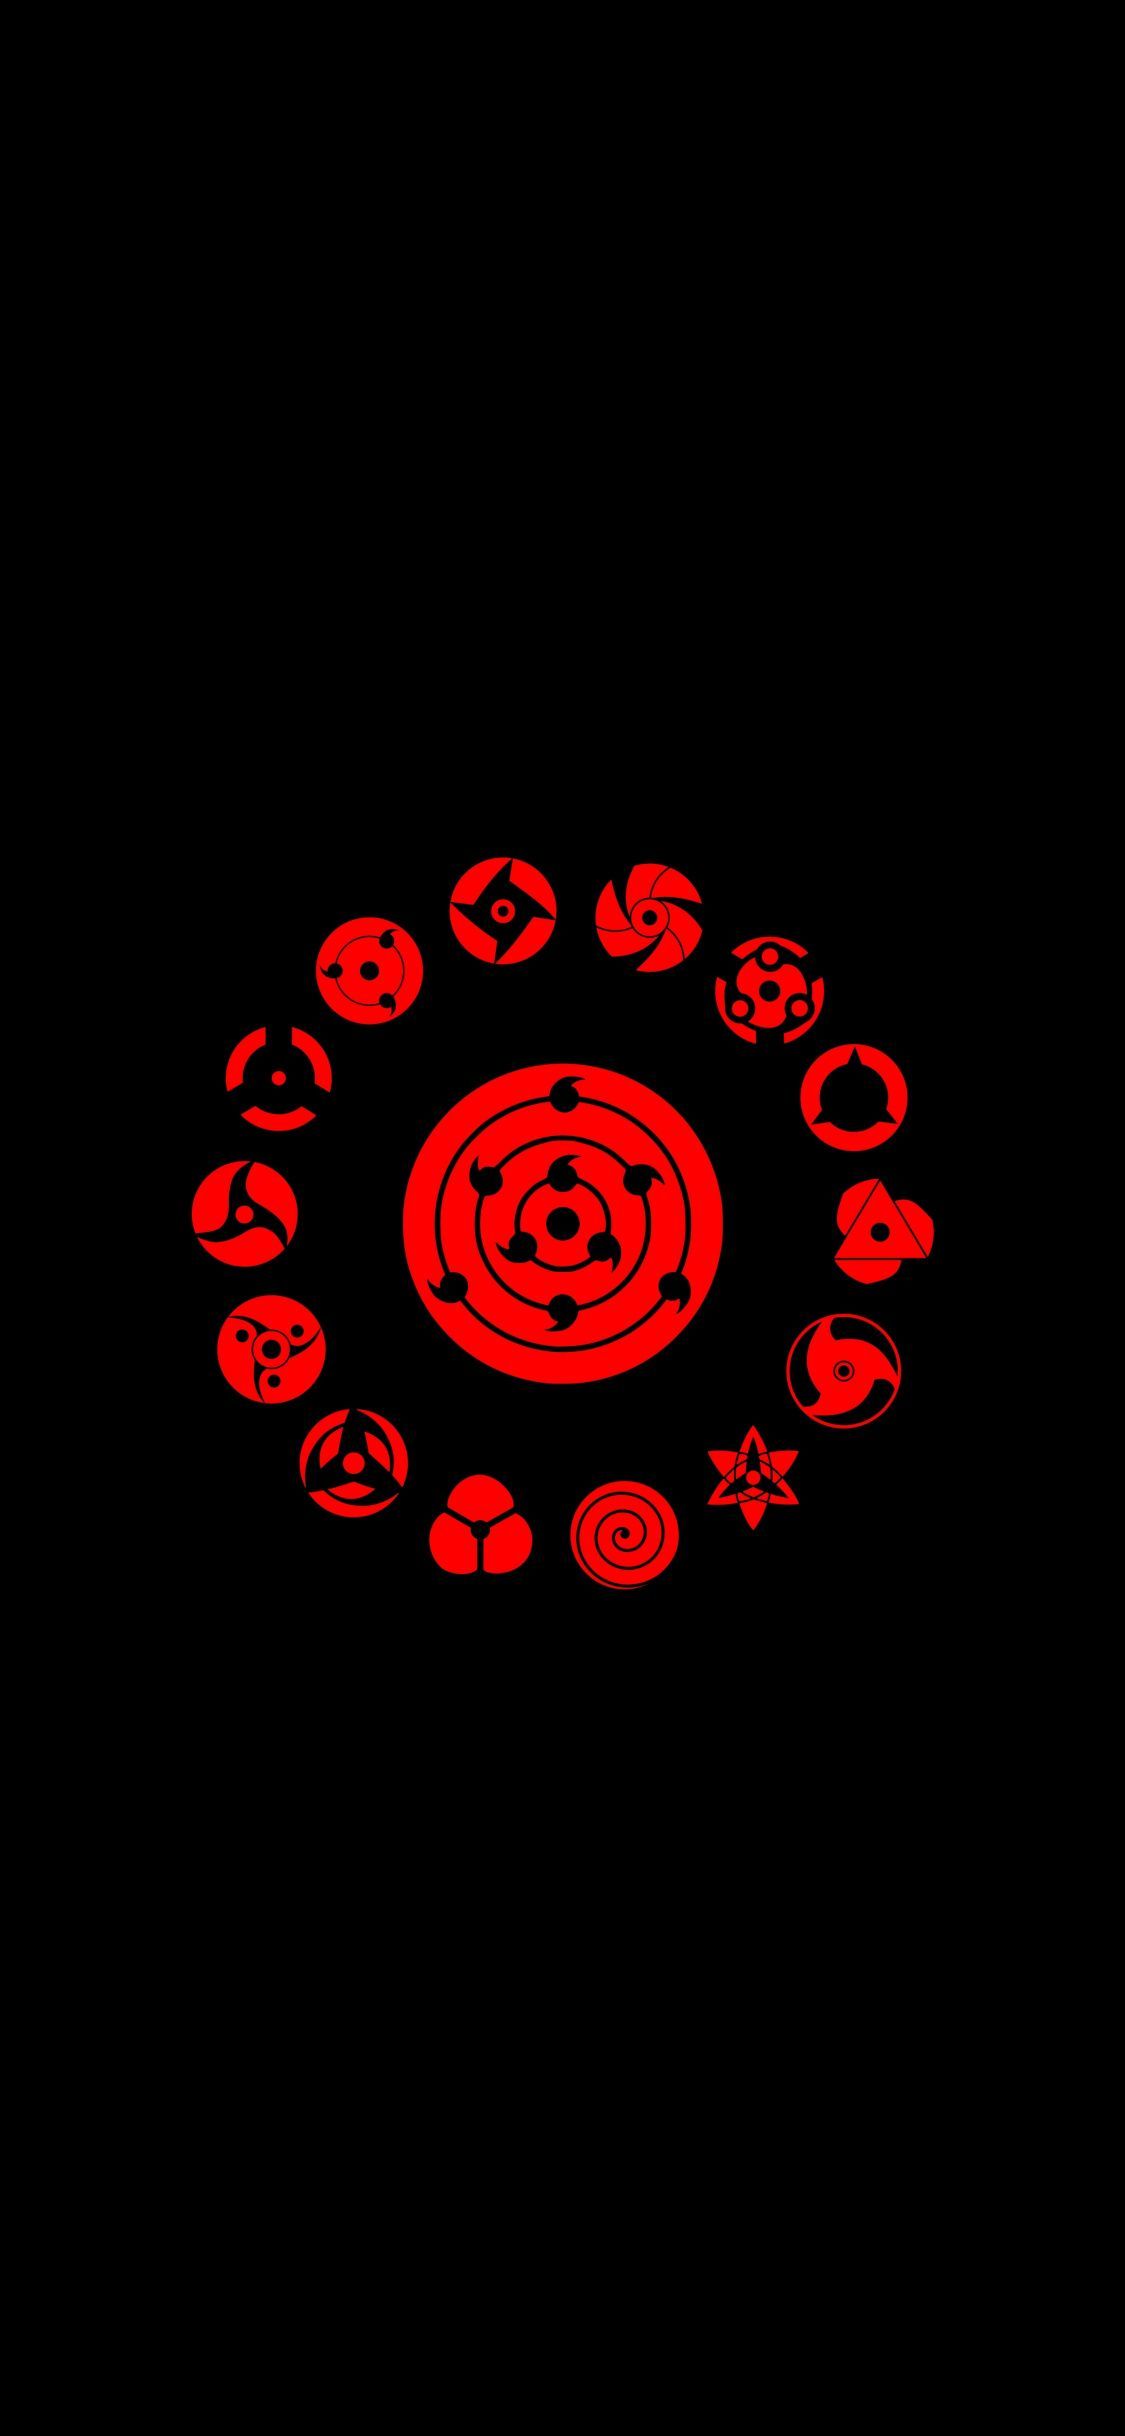 uchiha clan symbol wallpaper